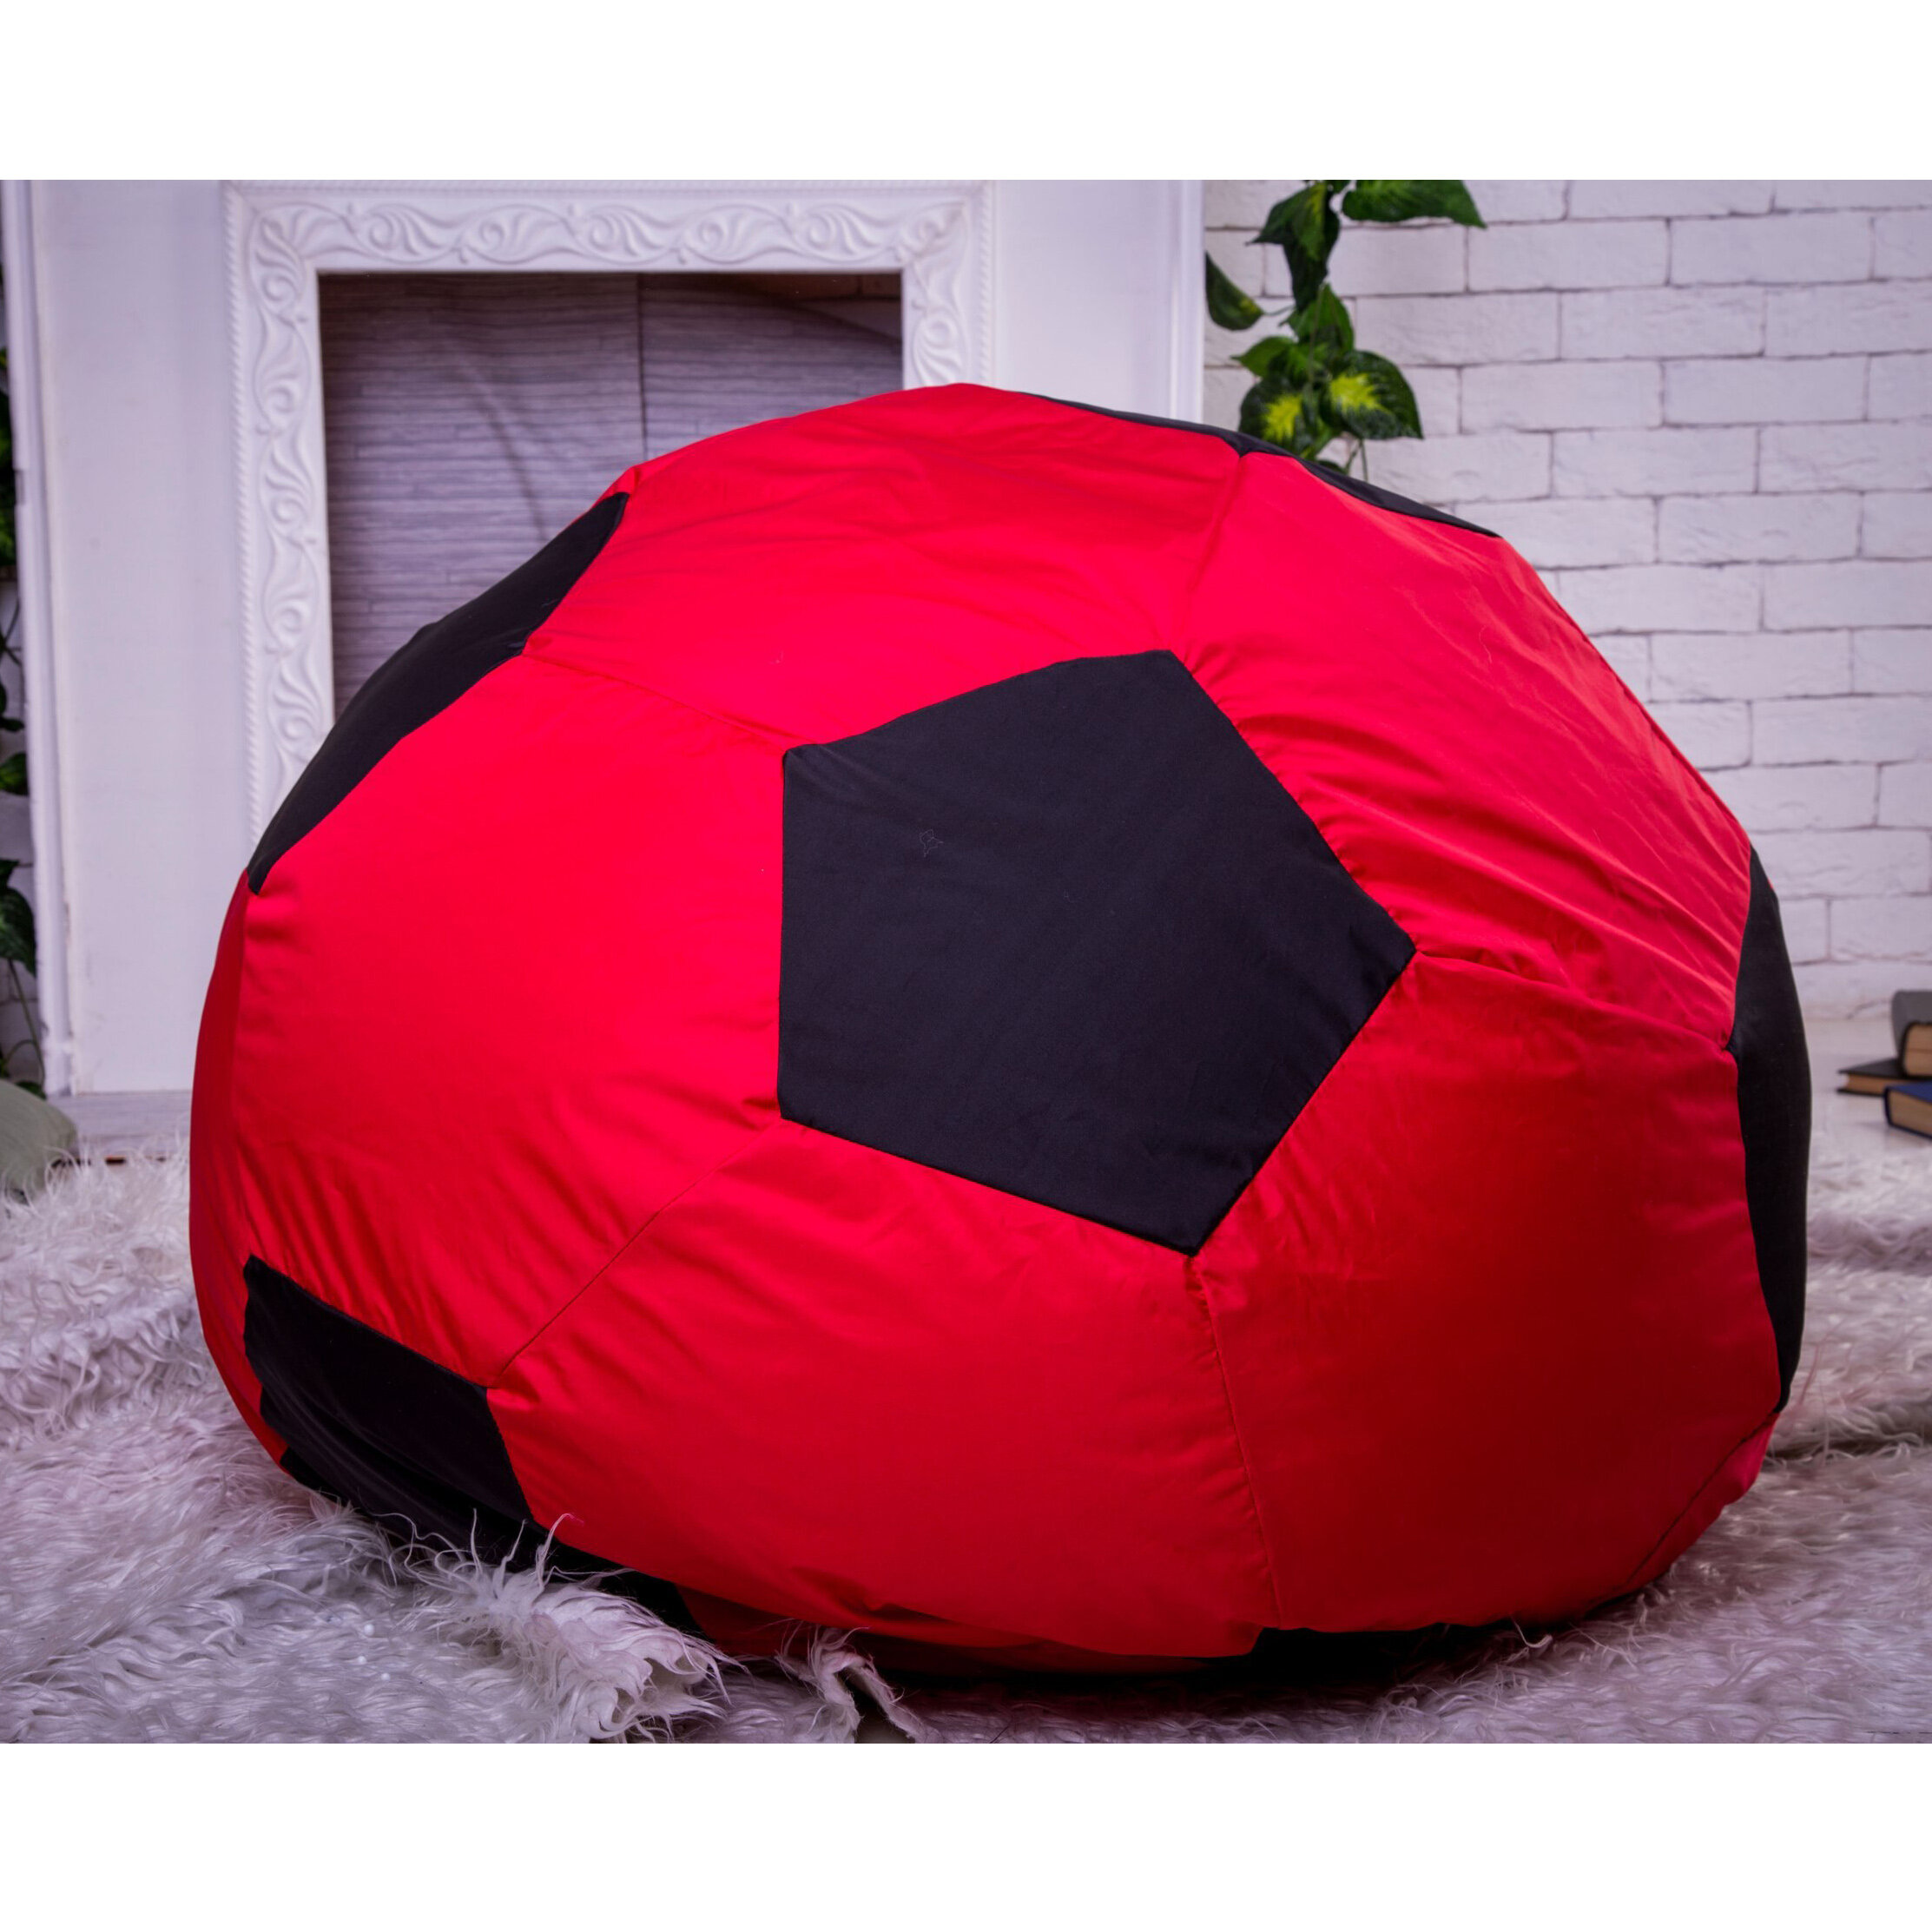 Мягкое кресло "Мяч" красно-черное, ткань Дюспо милки, Диаметр 100см / 100 литров от производителя kreslo-Igrushka - фотография № 2